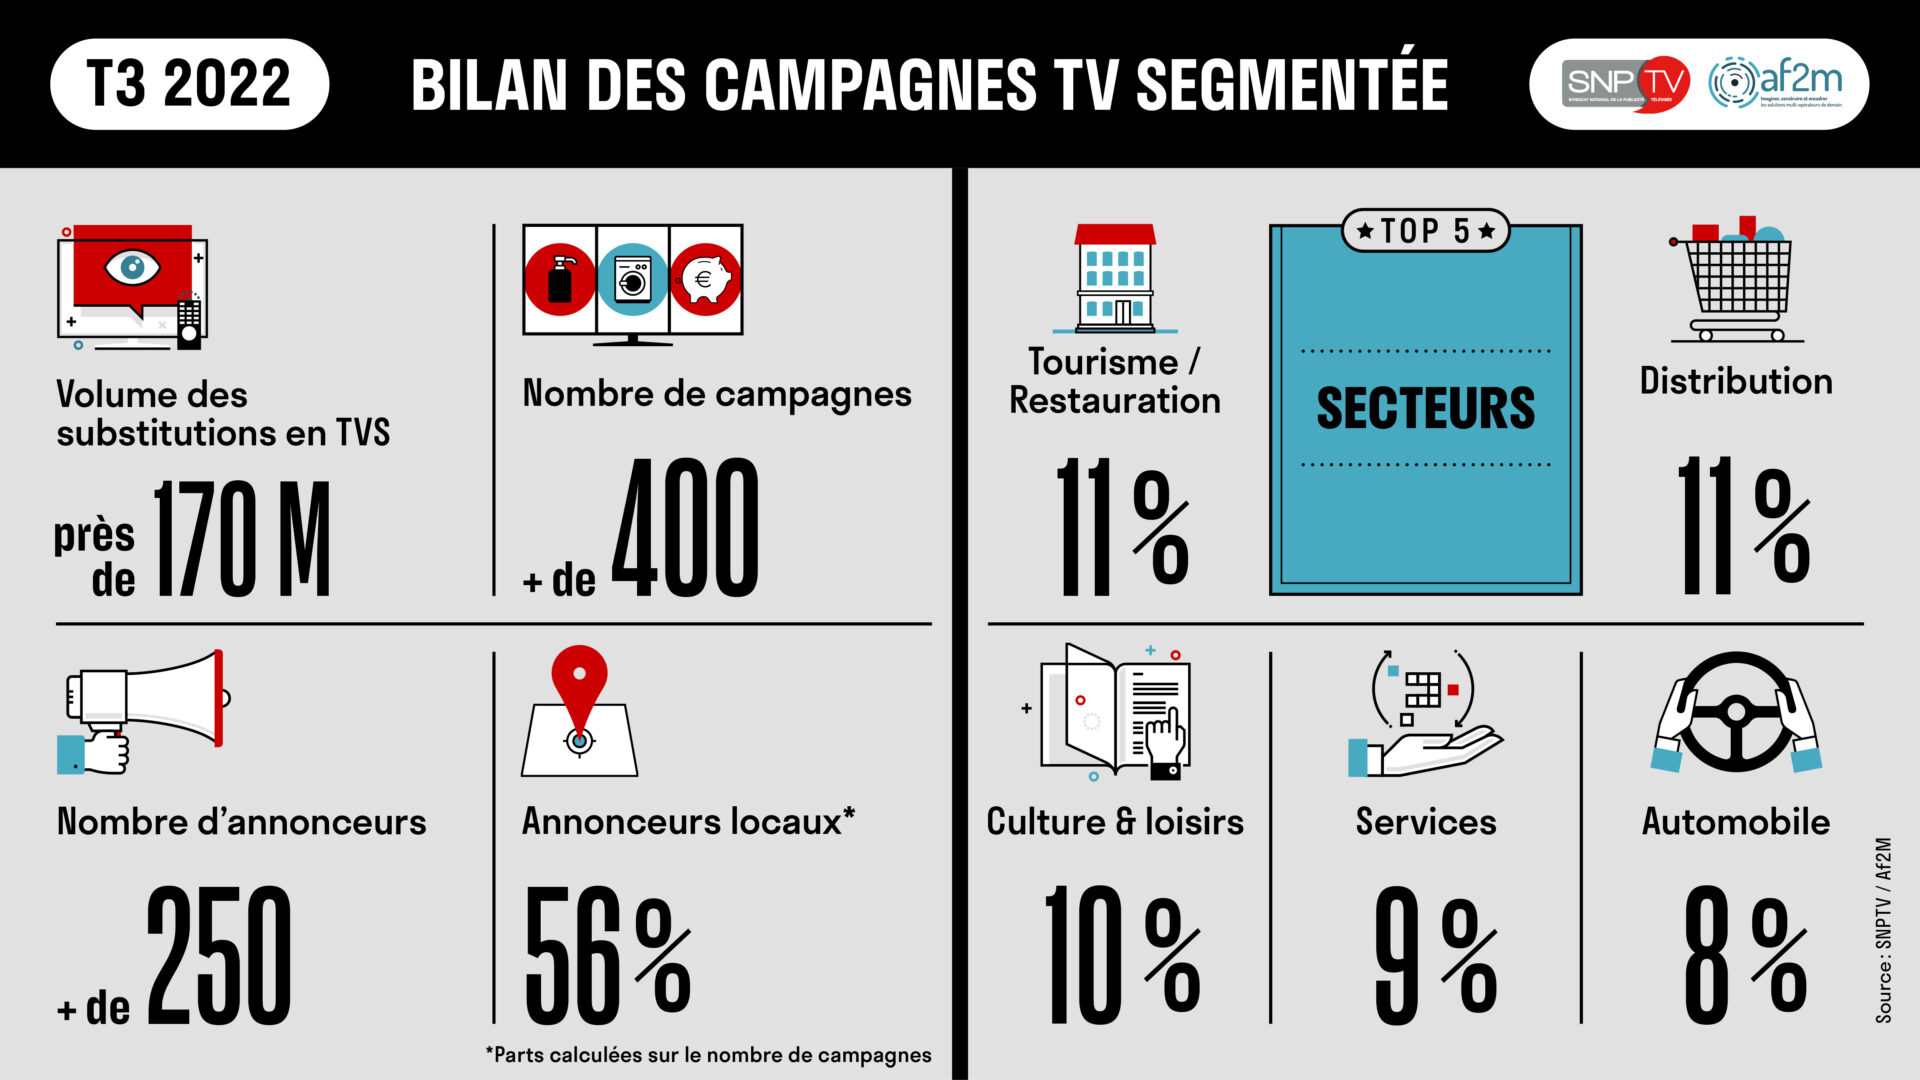 Bilan des campagnes TV segmentée T3 2022